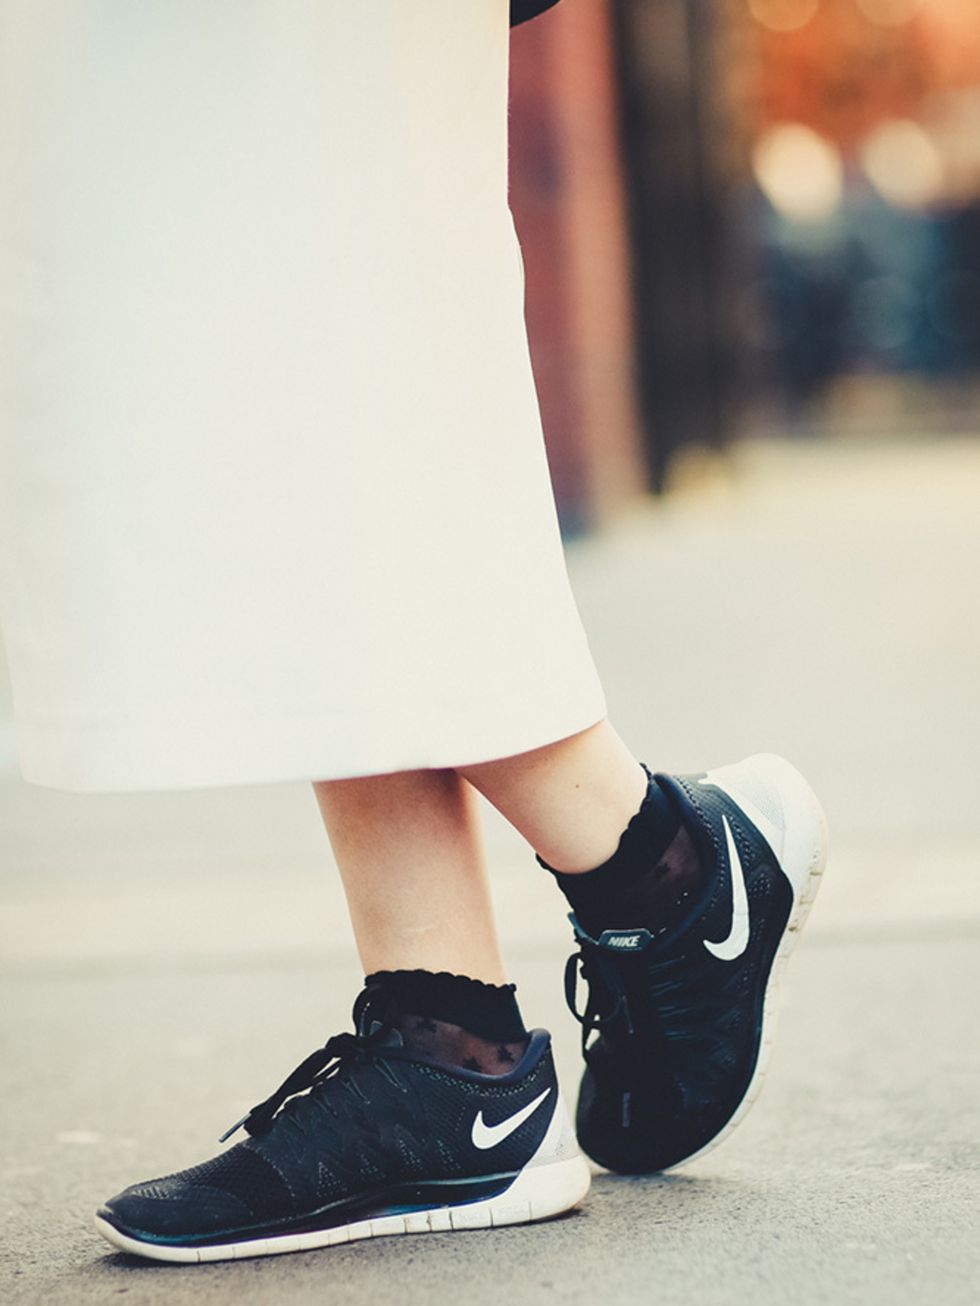 <p>Kirsty Dale - Executive Fashion Director</p>

<p>Zara skirt, Topshop socks, Nike trainers.</p>